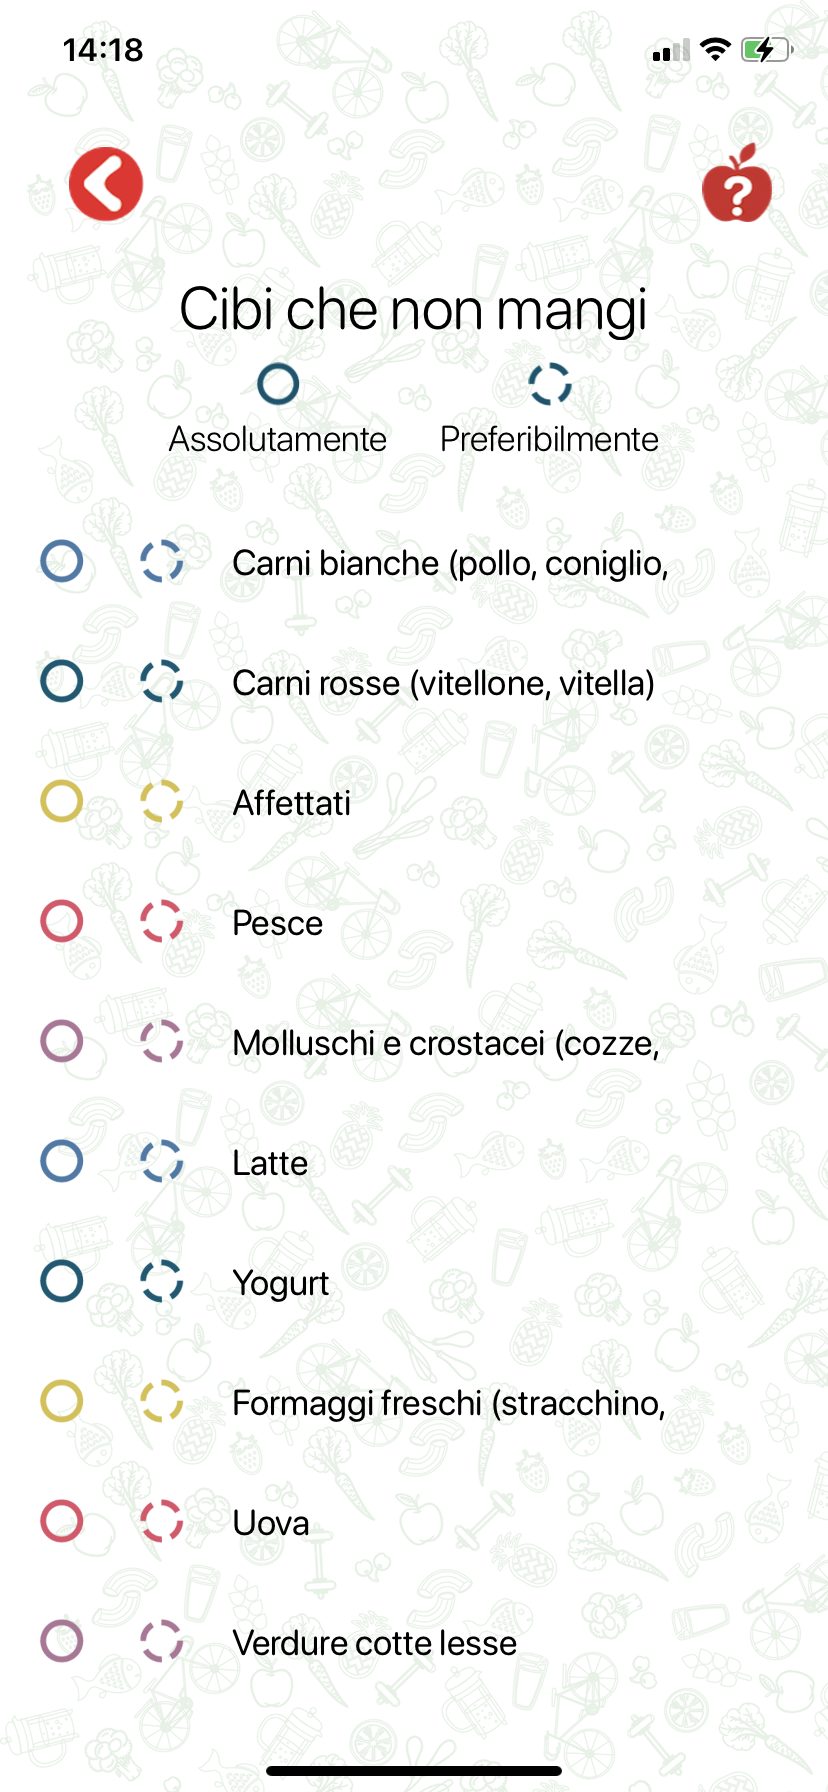 Dimagrisci con l'app Melarossa: preferenze alimentari